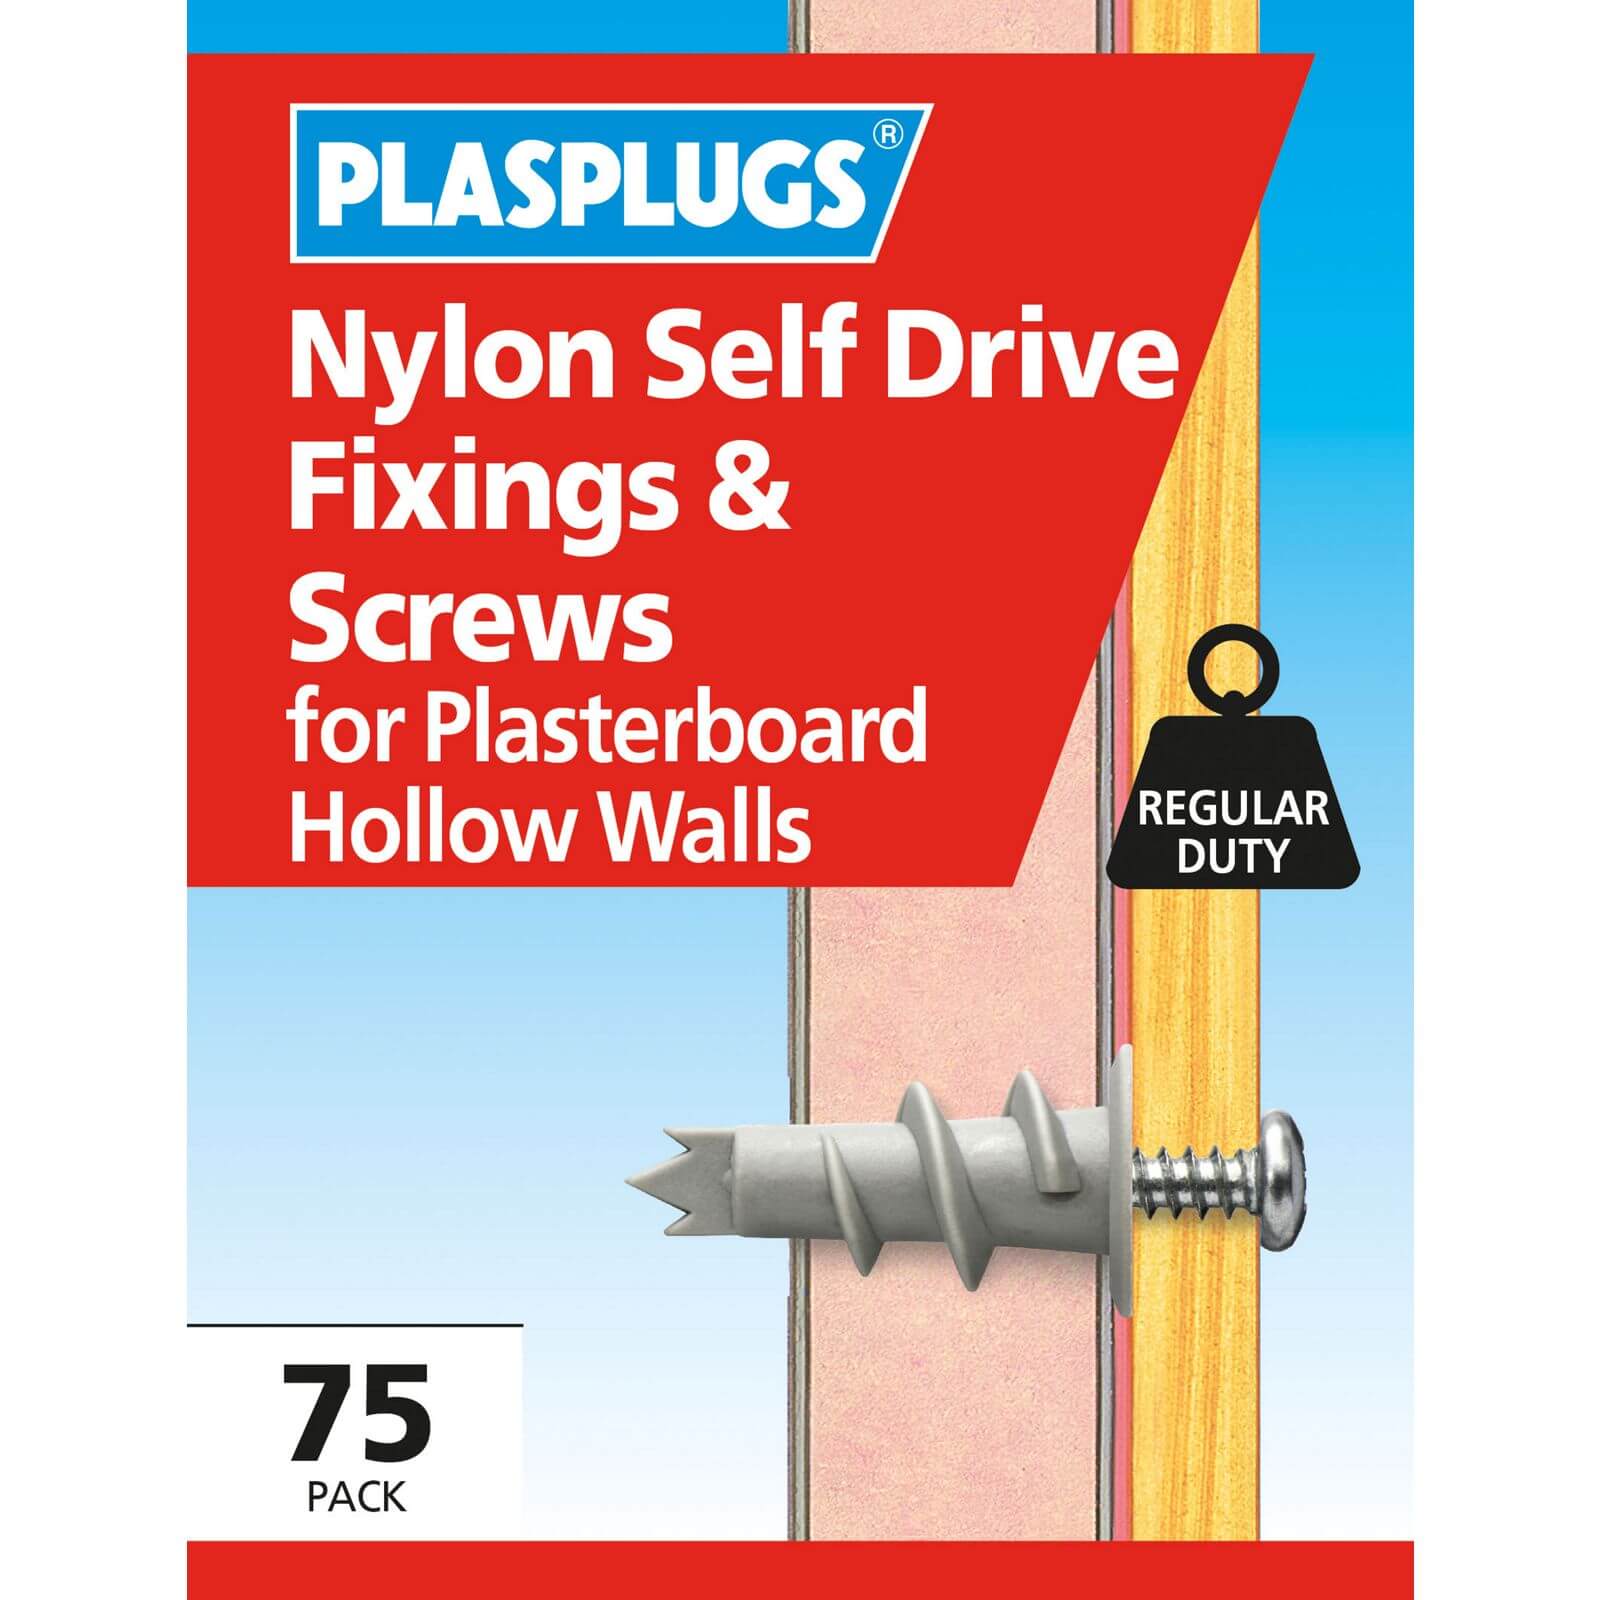 Nylon Self Drive Fixings & Screw - 75 Pack